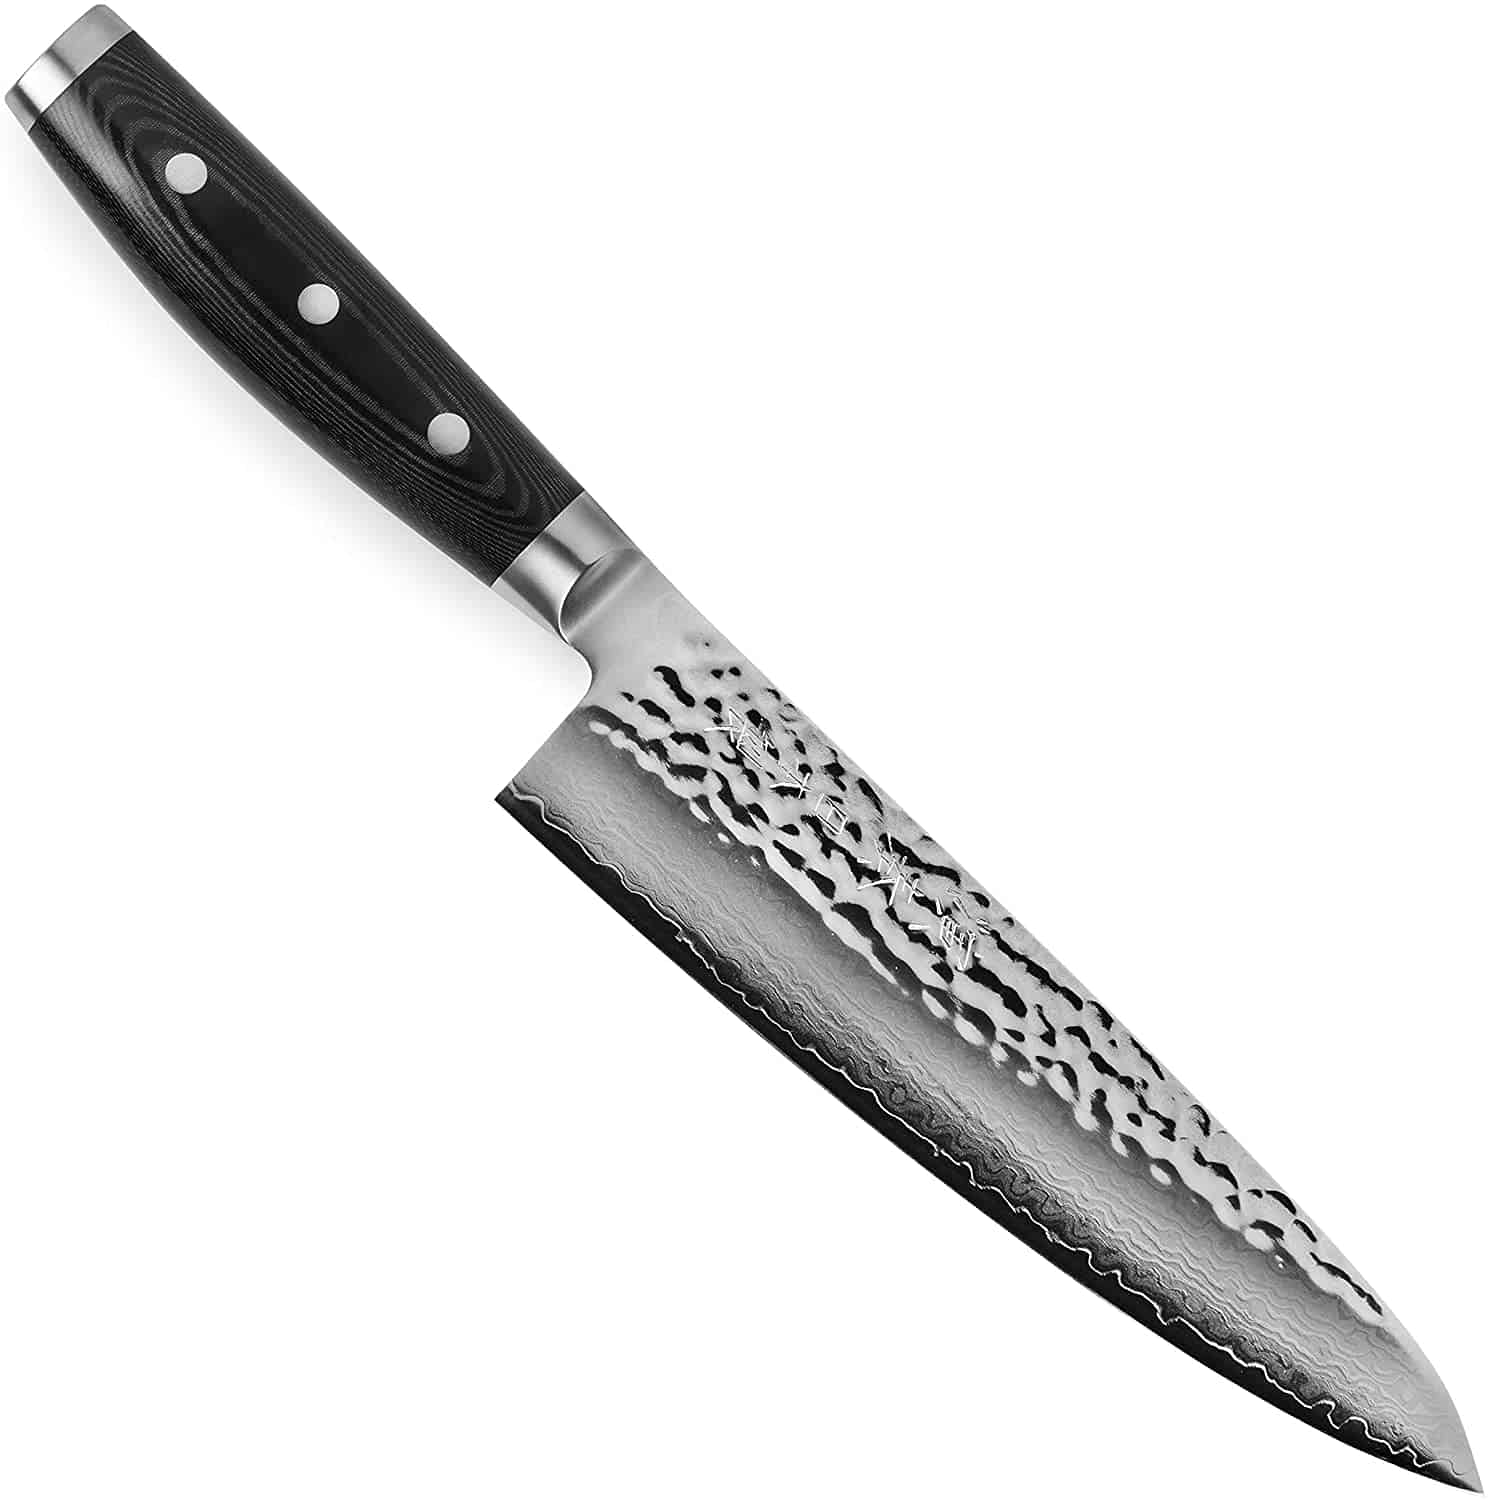 El mejor cuchillo gyuto para usuarios zurdos: cuchillo de chef Enso